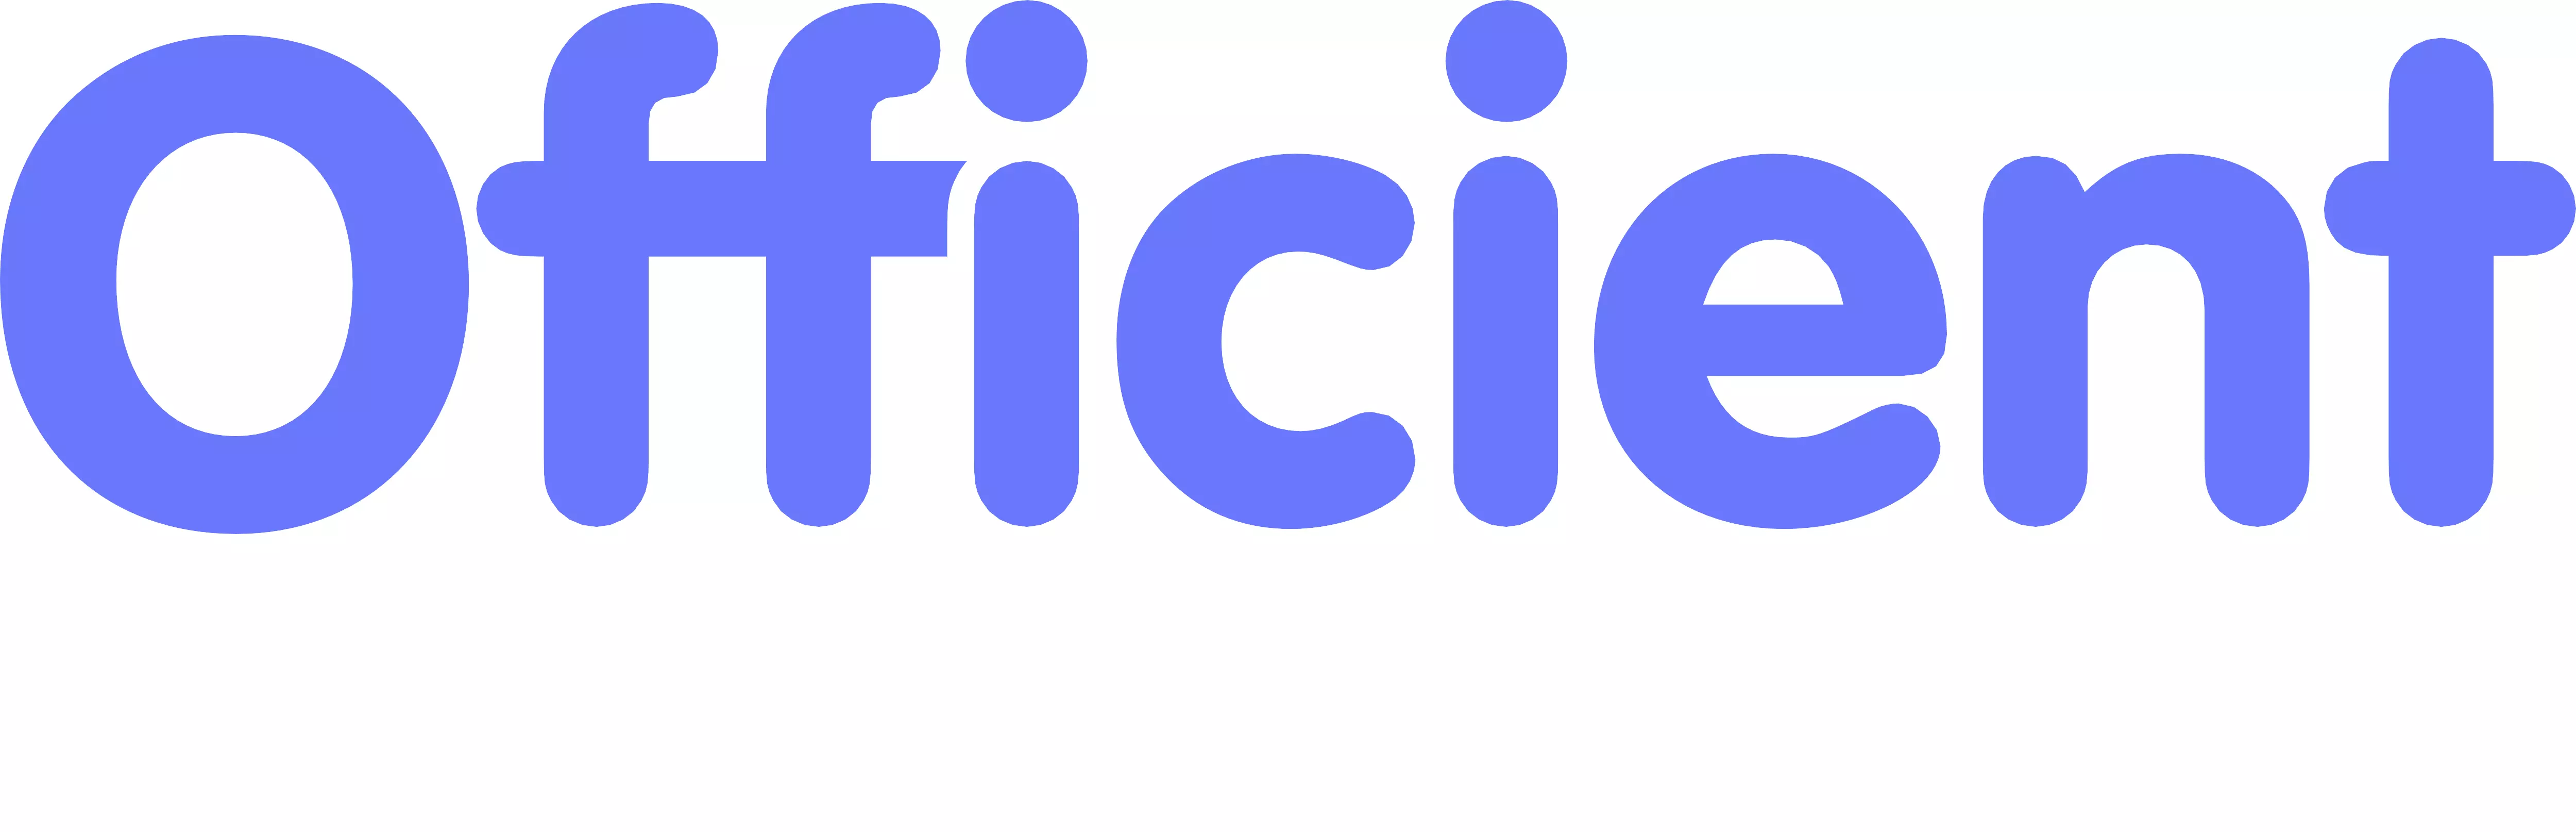 Officient logo